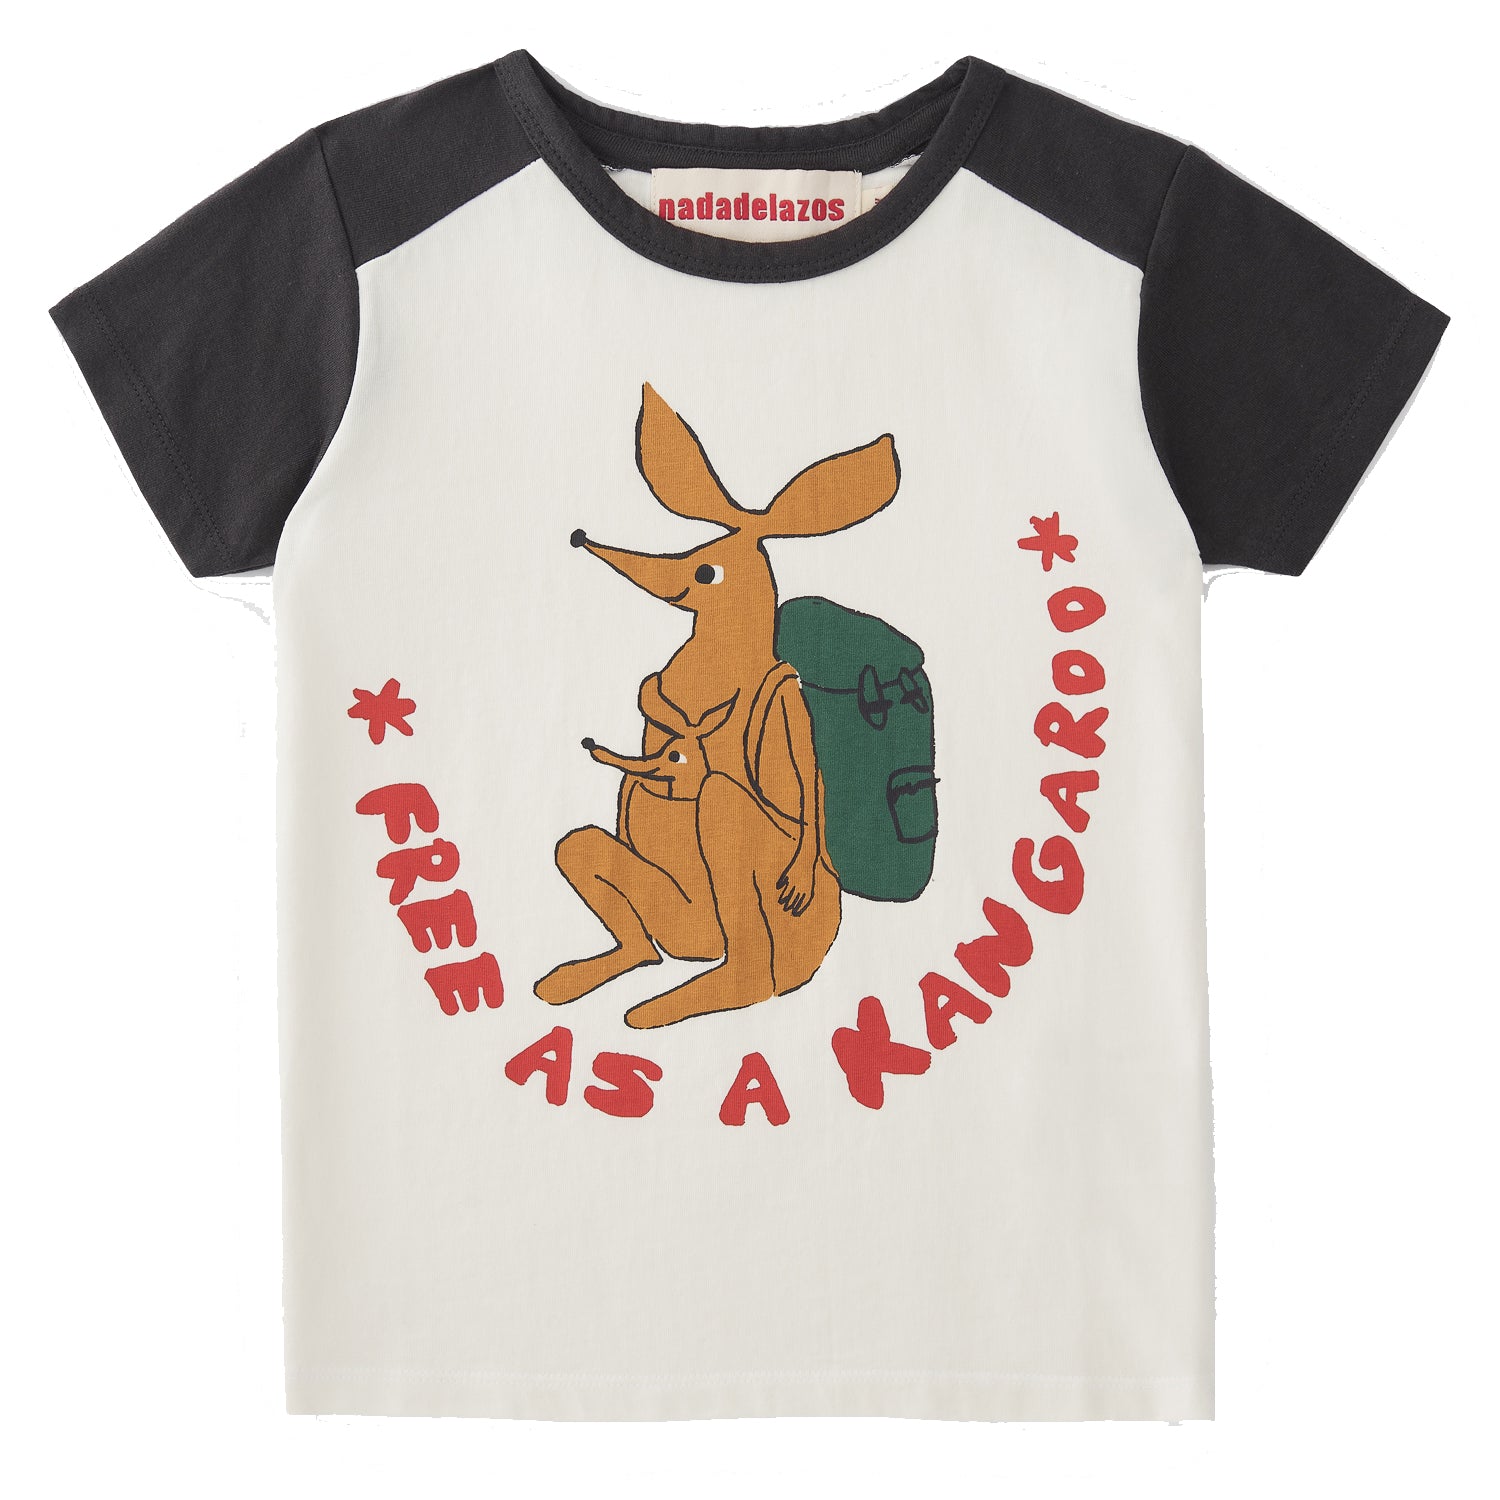 Kid & Nadadelazos The a Kangaroo – Crib Green as Free T-Shirt